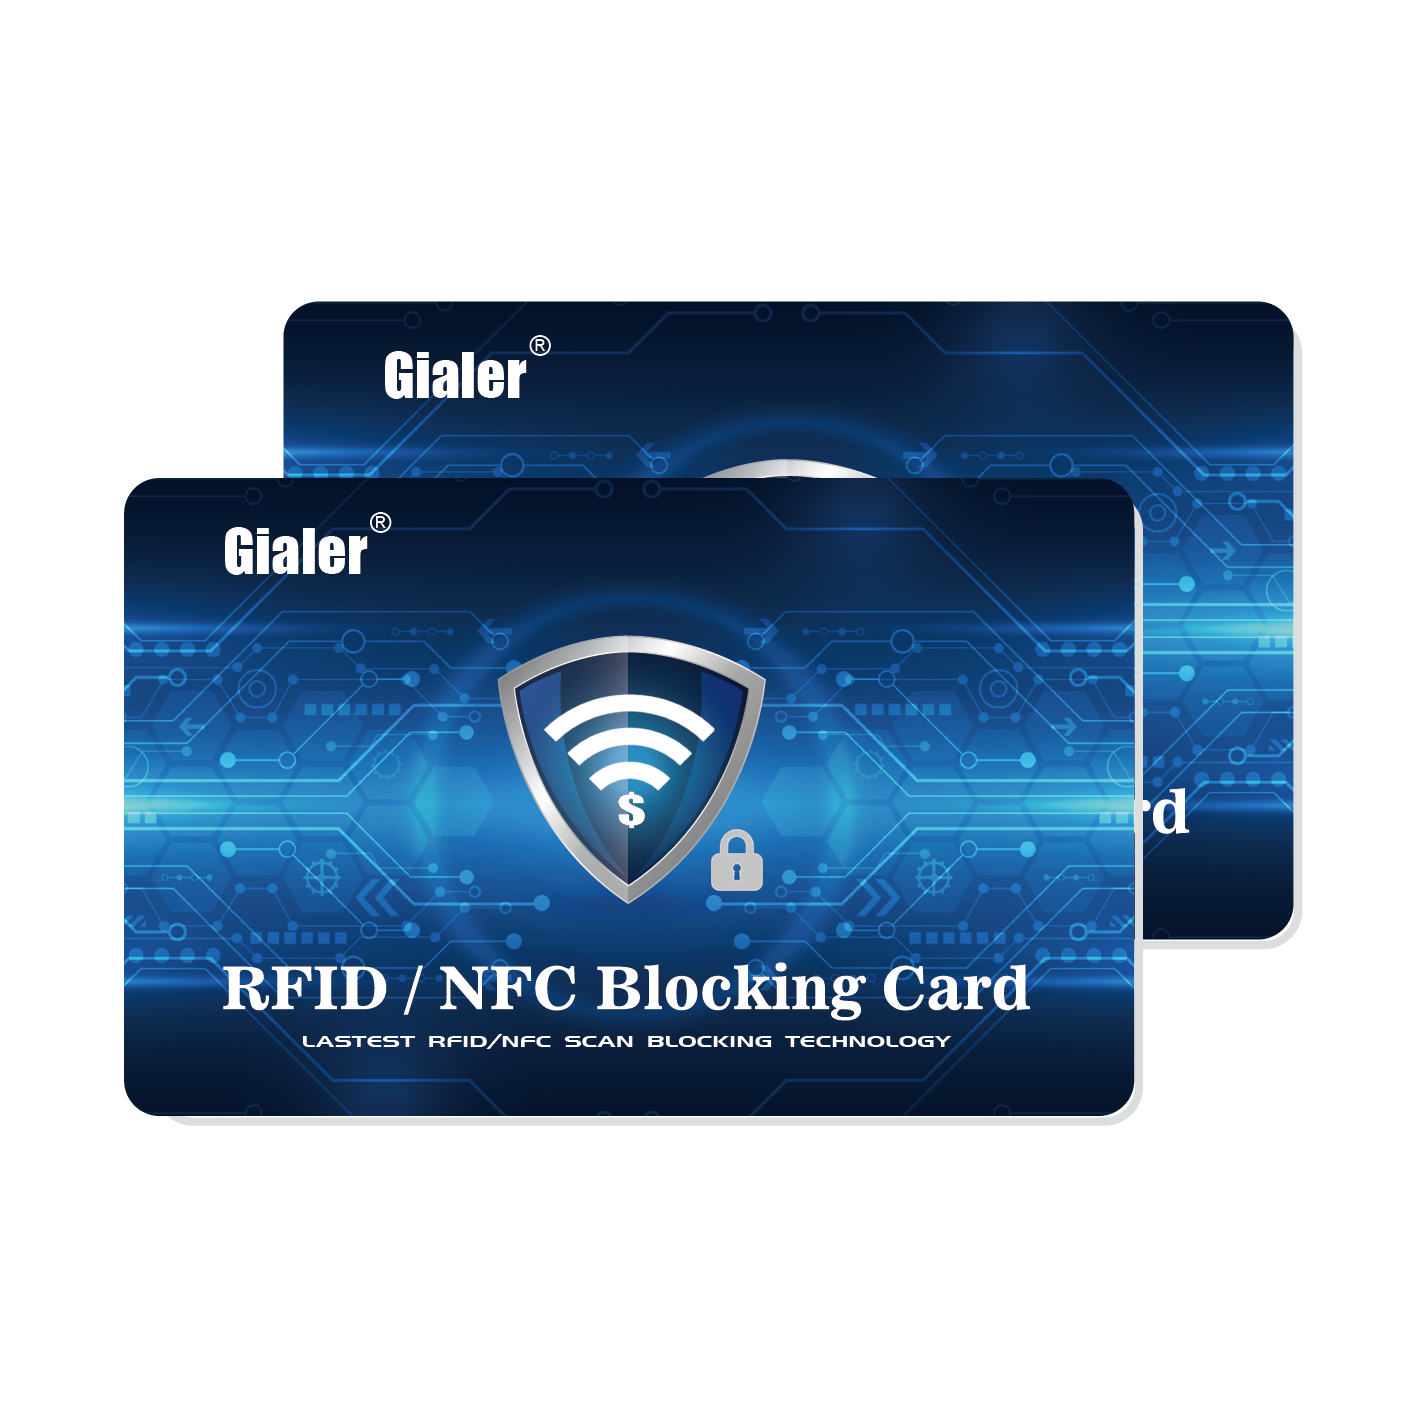 How RFID blocking works